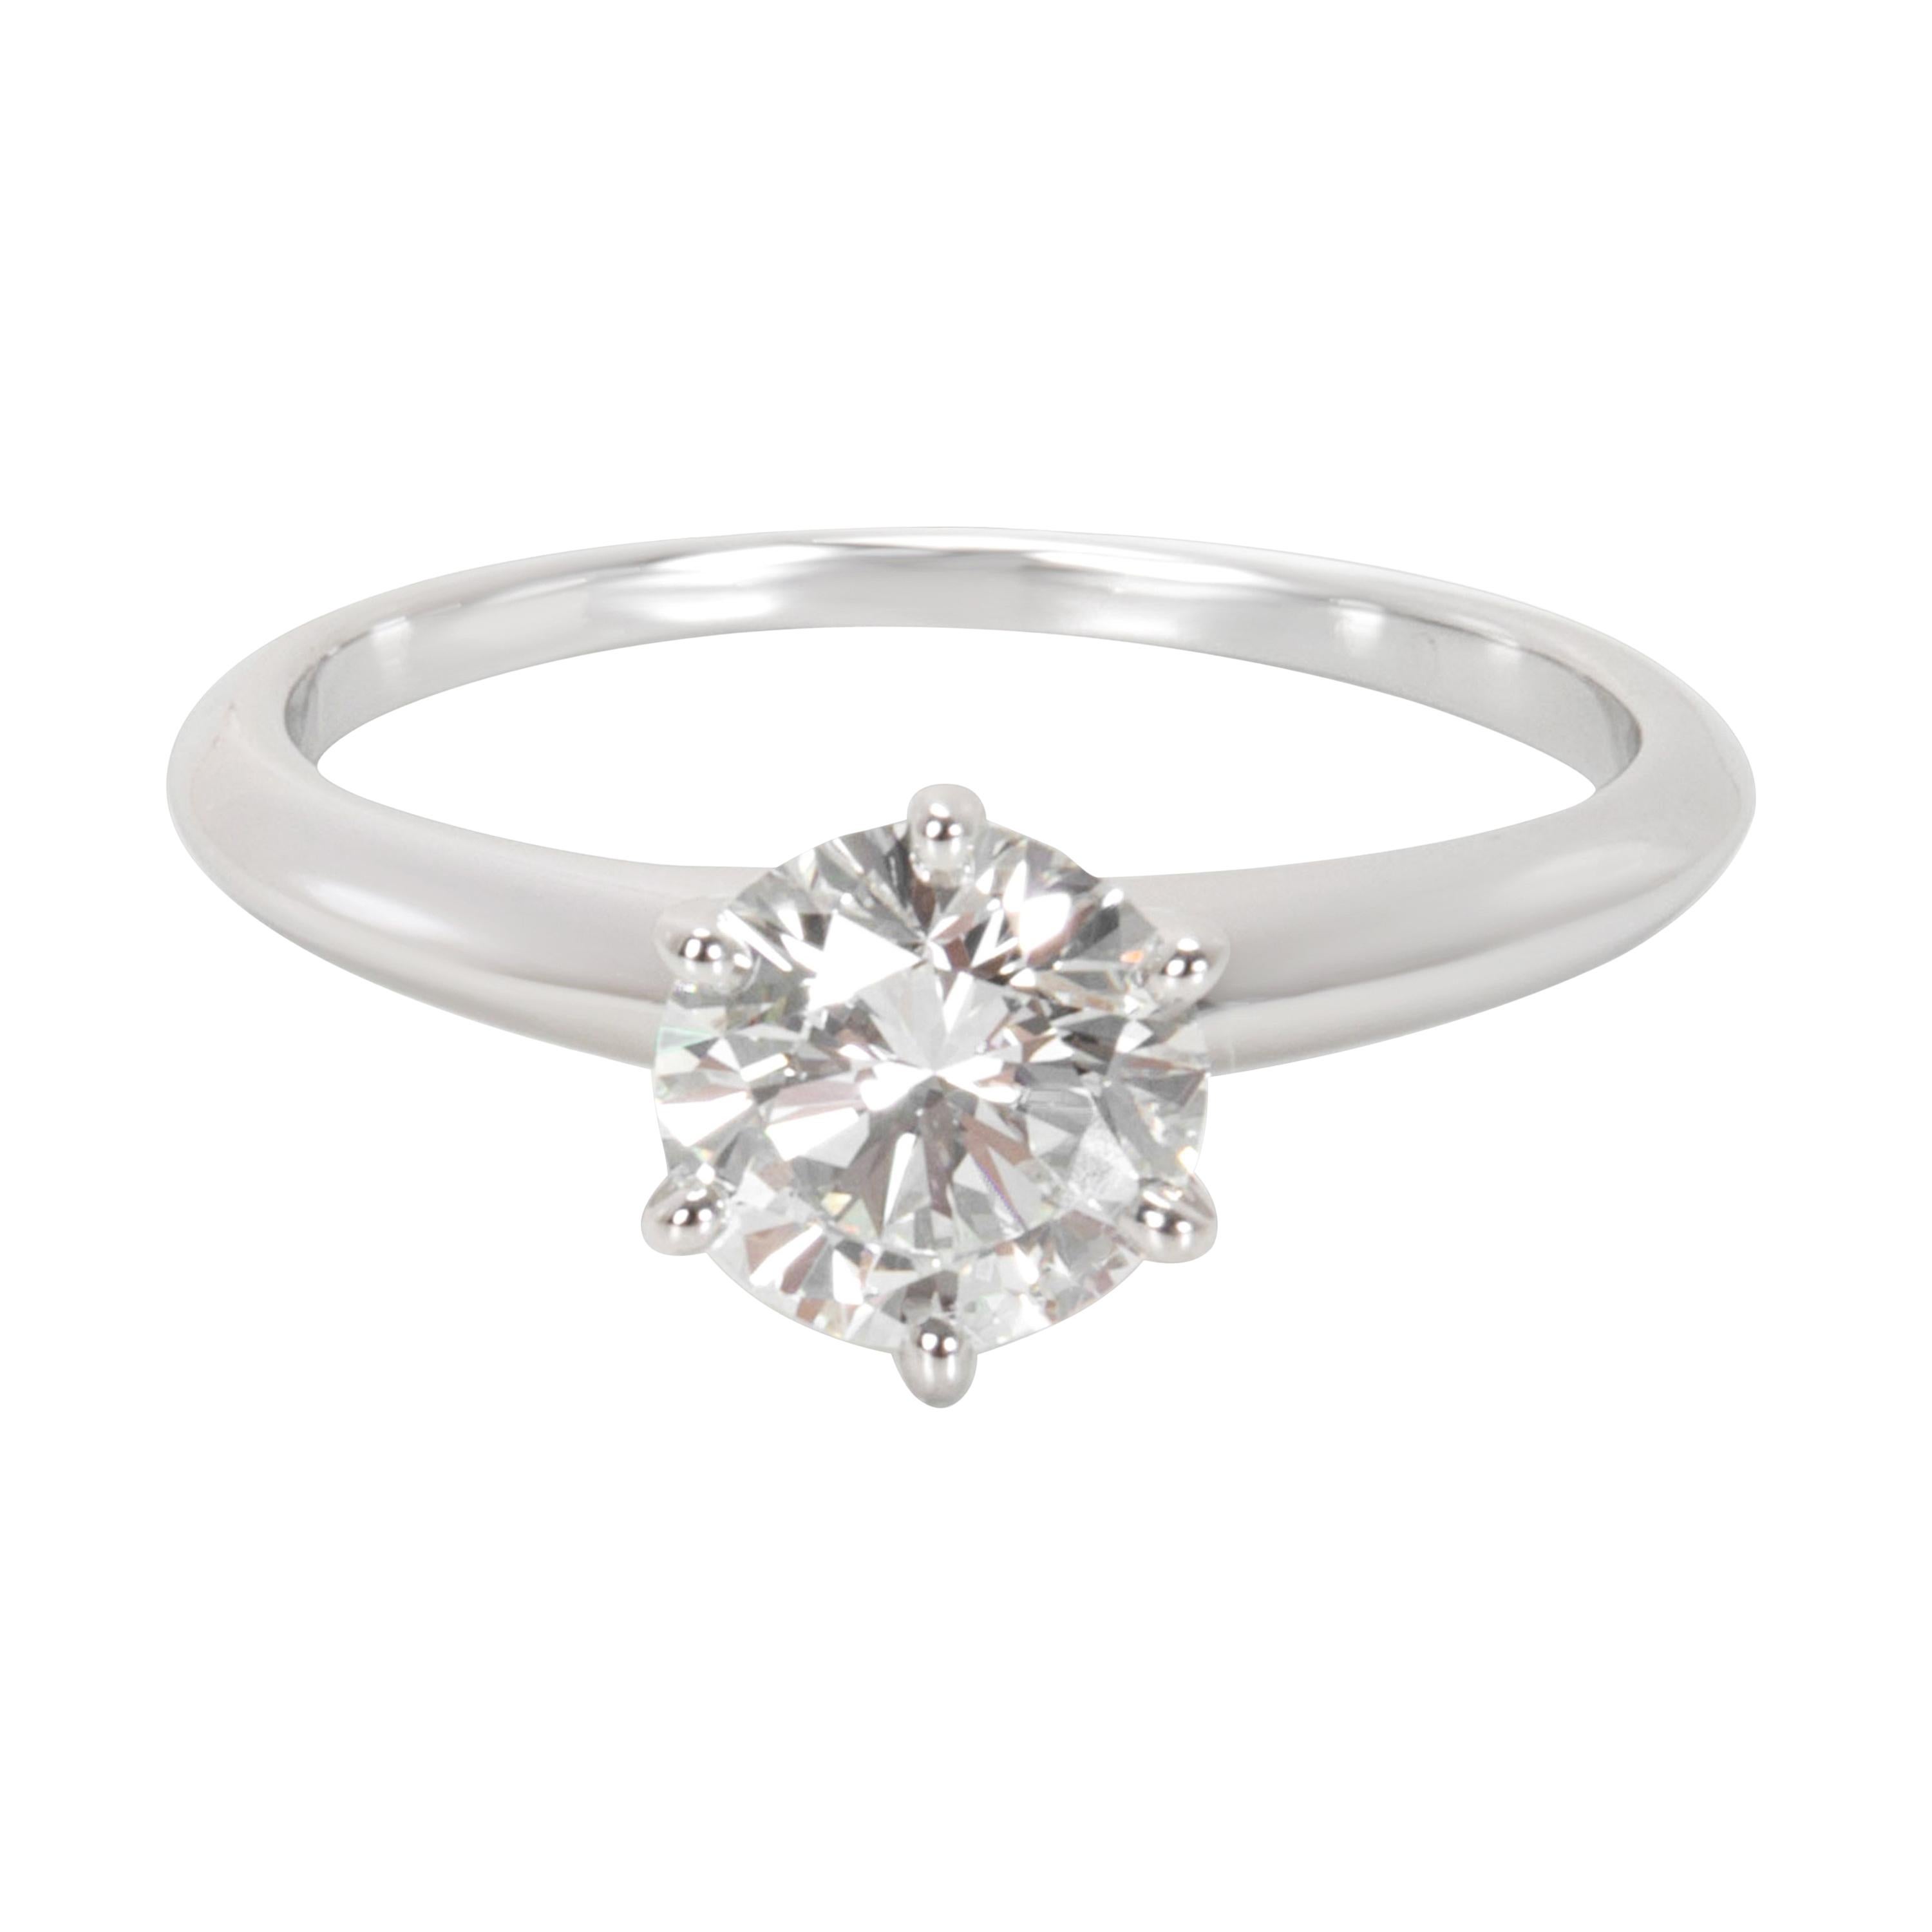 Tiffany & Co. Diamond Solitaire Engagement Ring in Platinum F/VS2 '1.27 Carat'